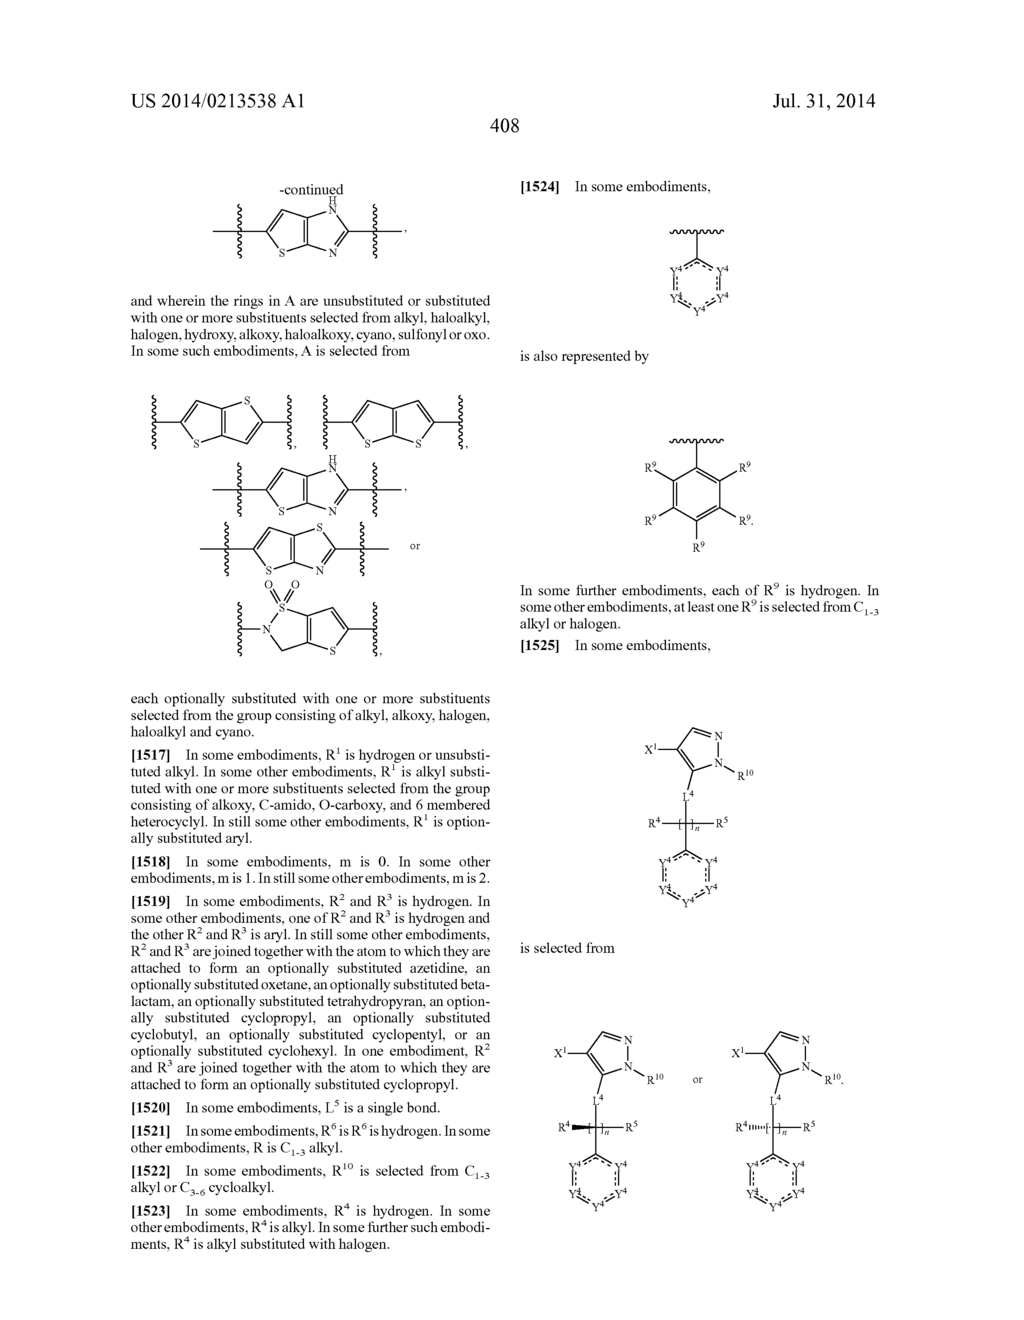 LYSOPHOSPHATIDIC ACID RECEPTOR ANTAGONISTS - diagram, schematic, and image 409